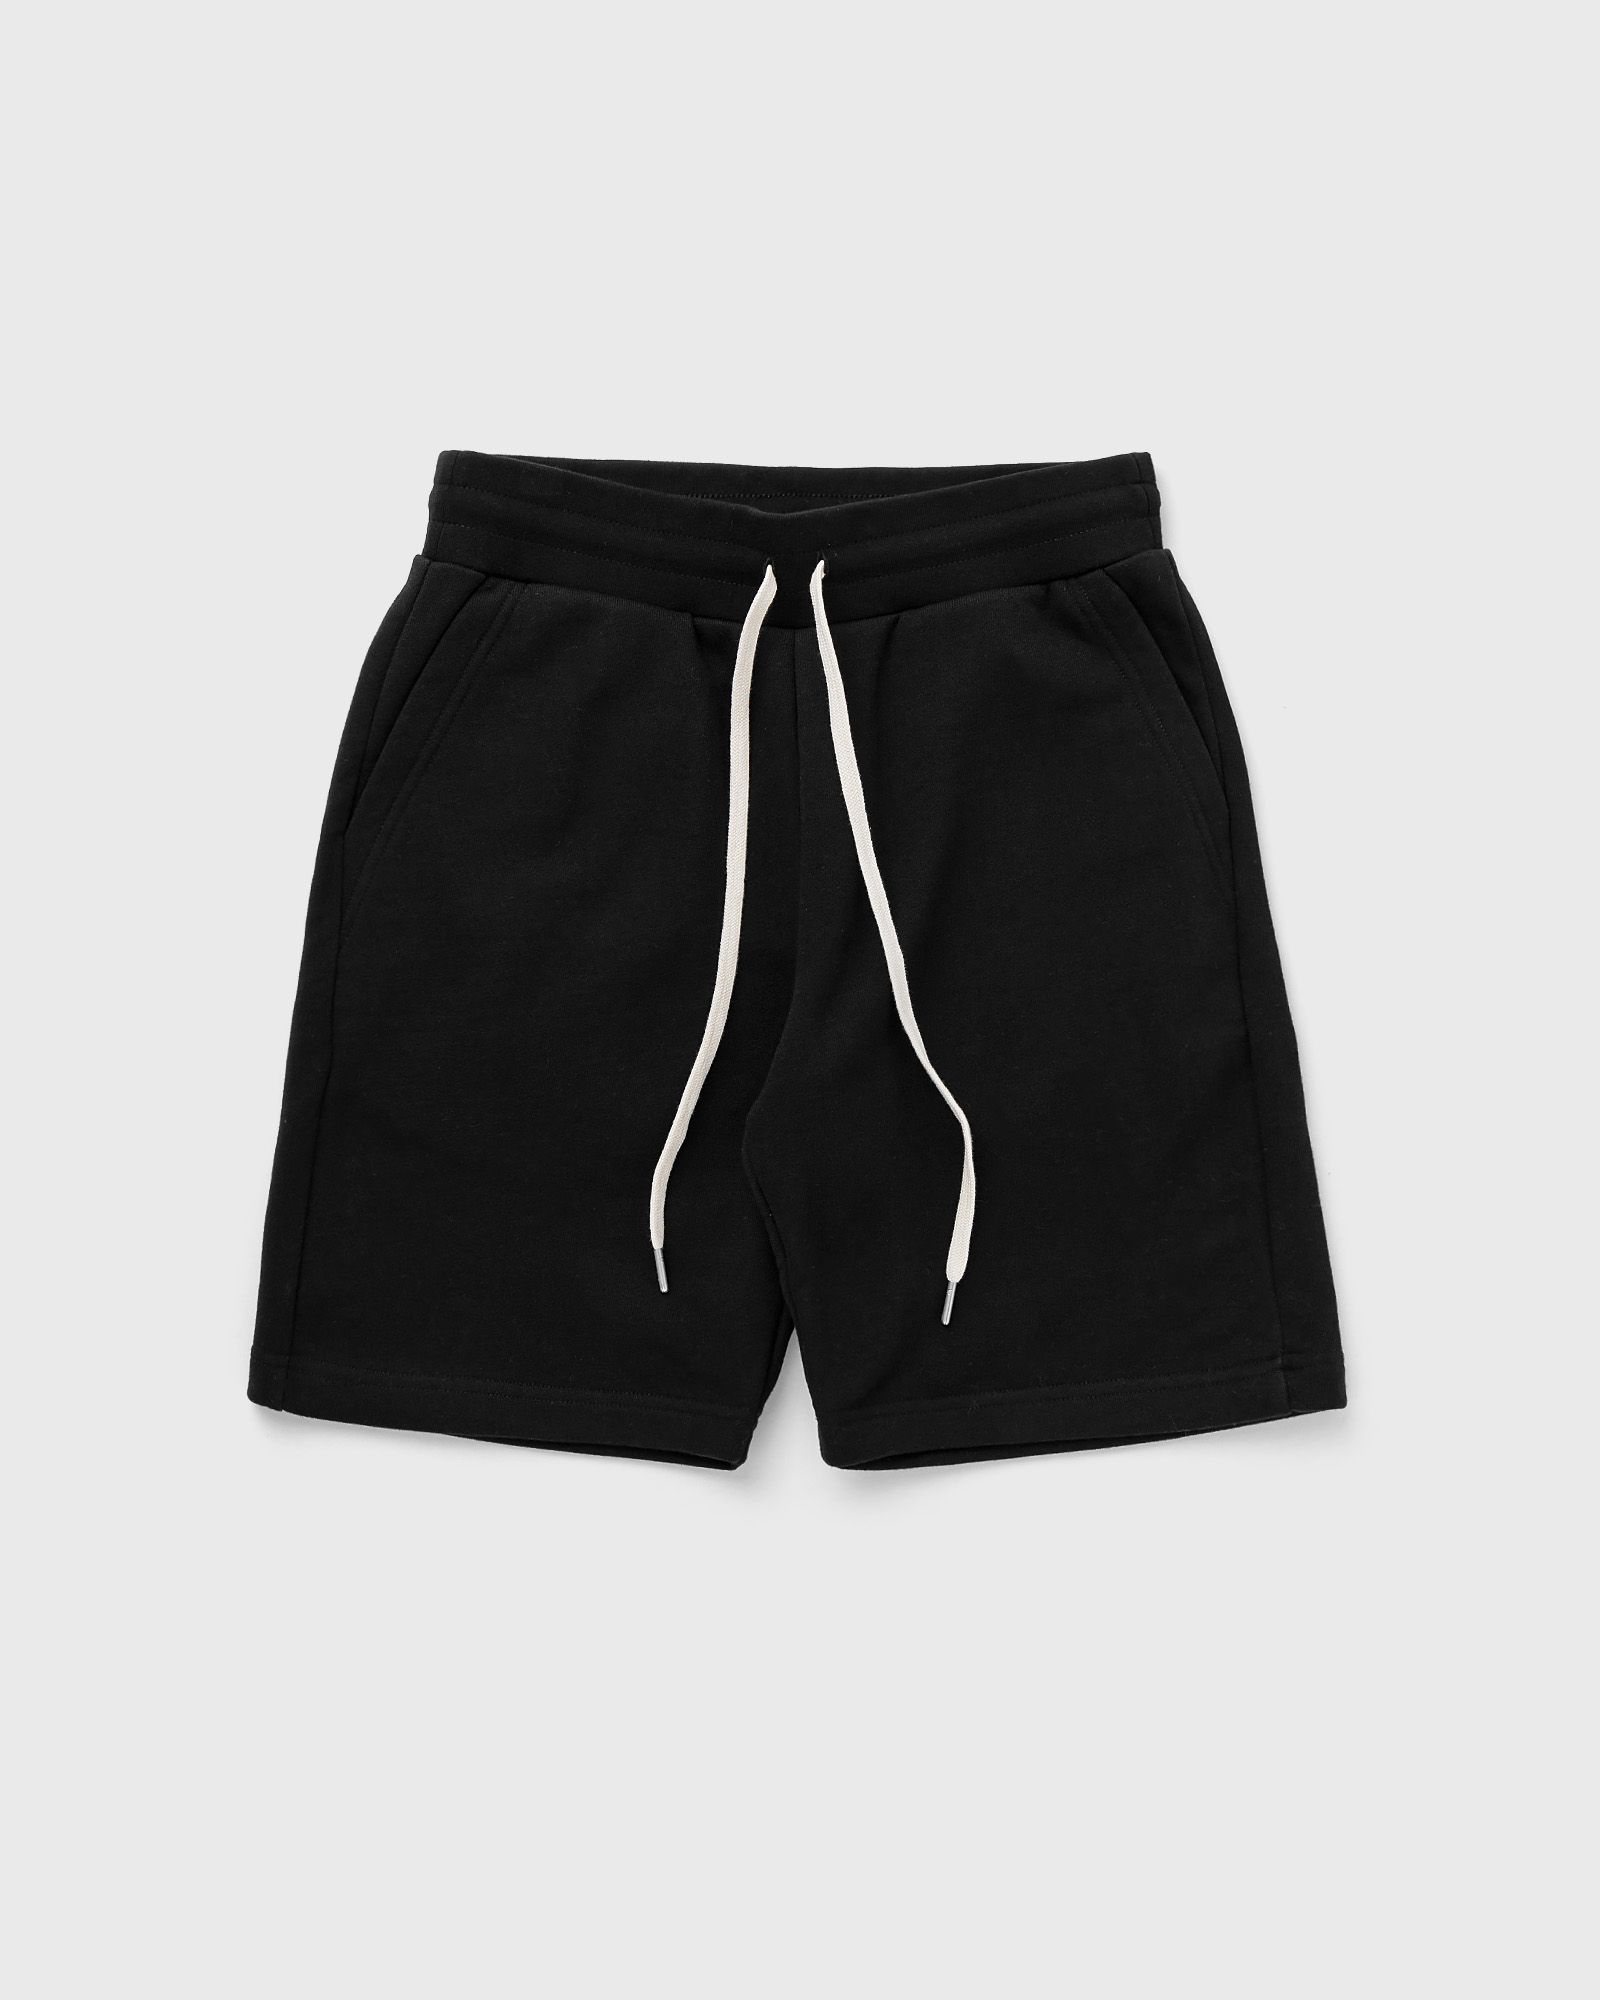 John Elliott - crimson shorts men casual shorts black in größe:l